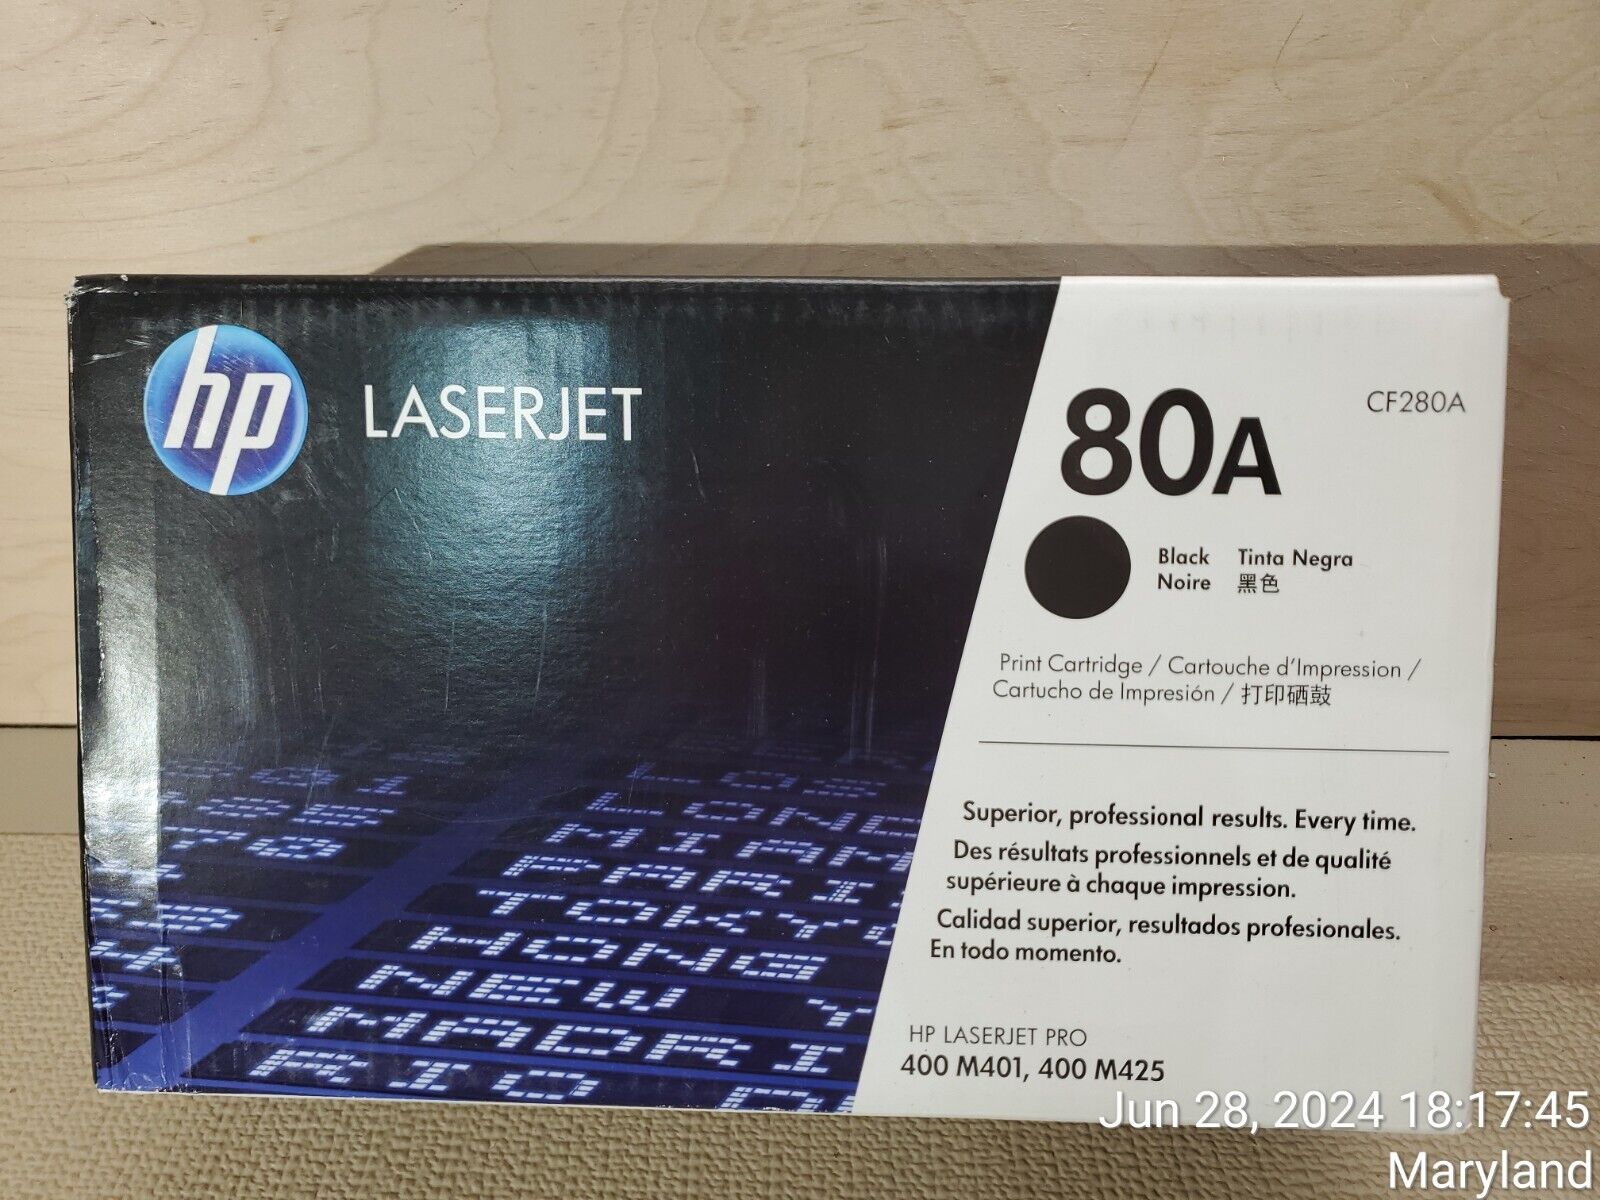 HP LaserJet 80A  Toner Cartridges - Black (CF280A)